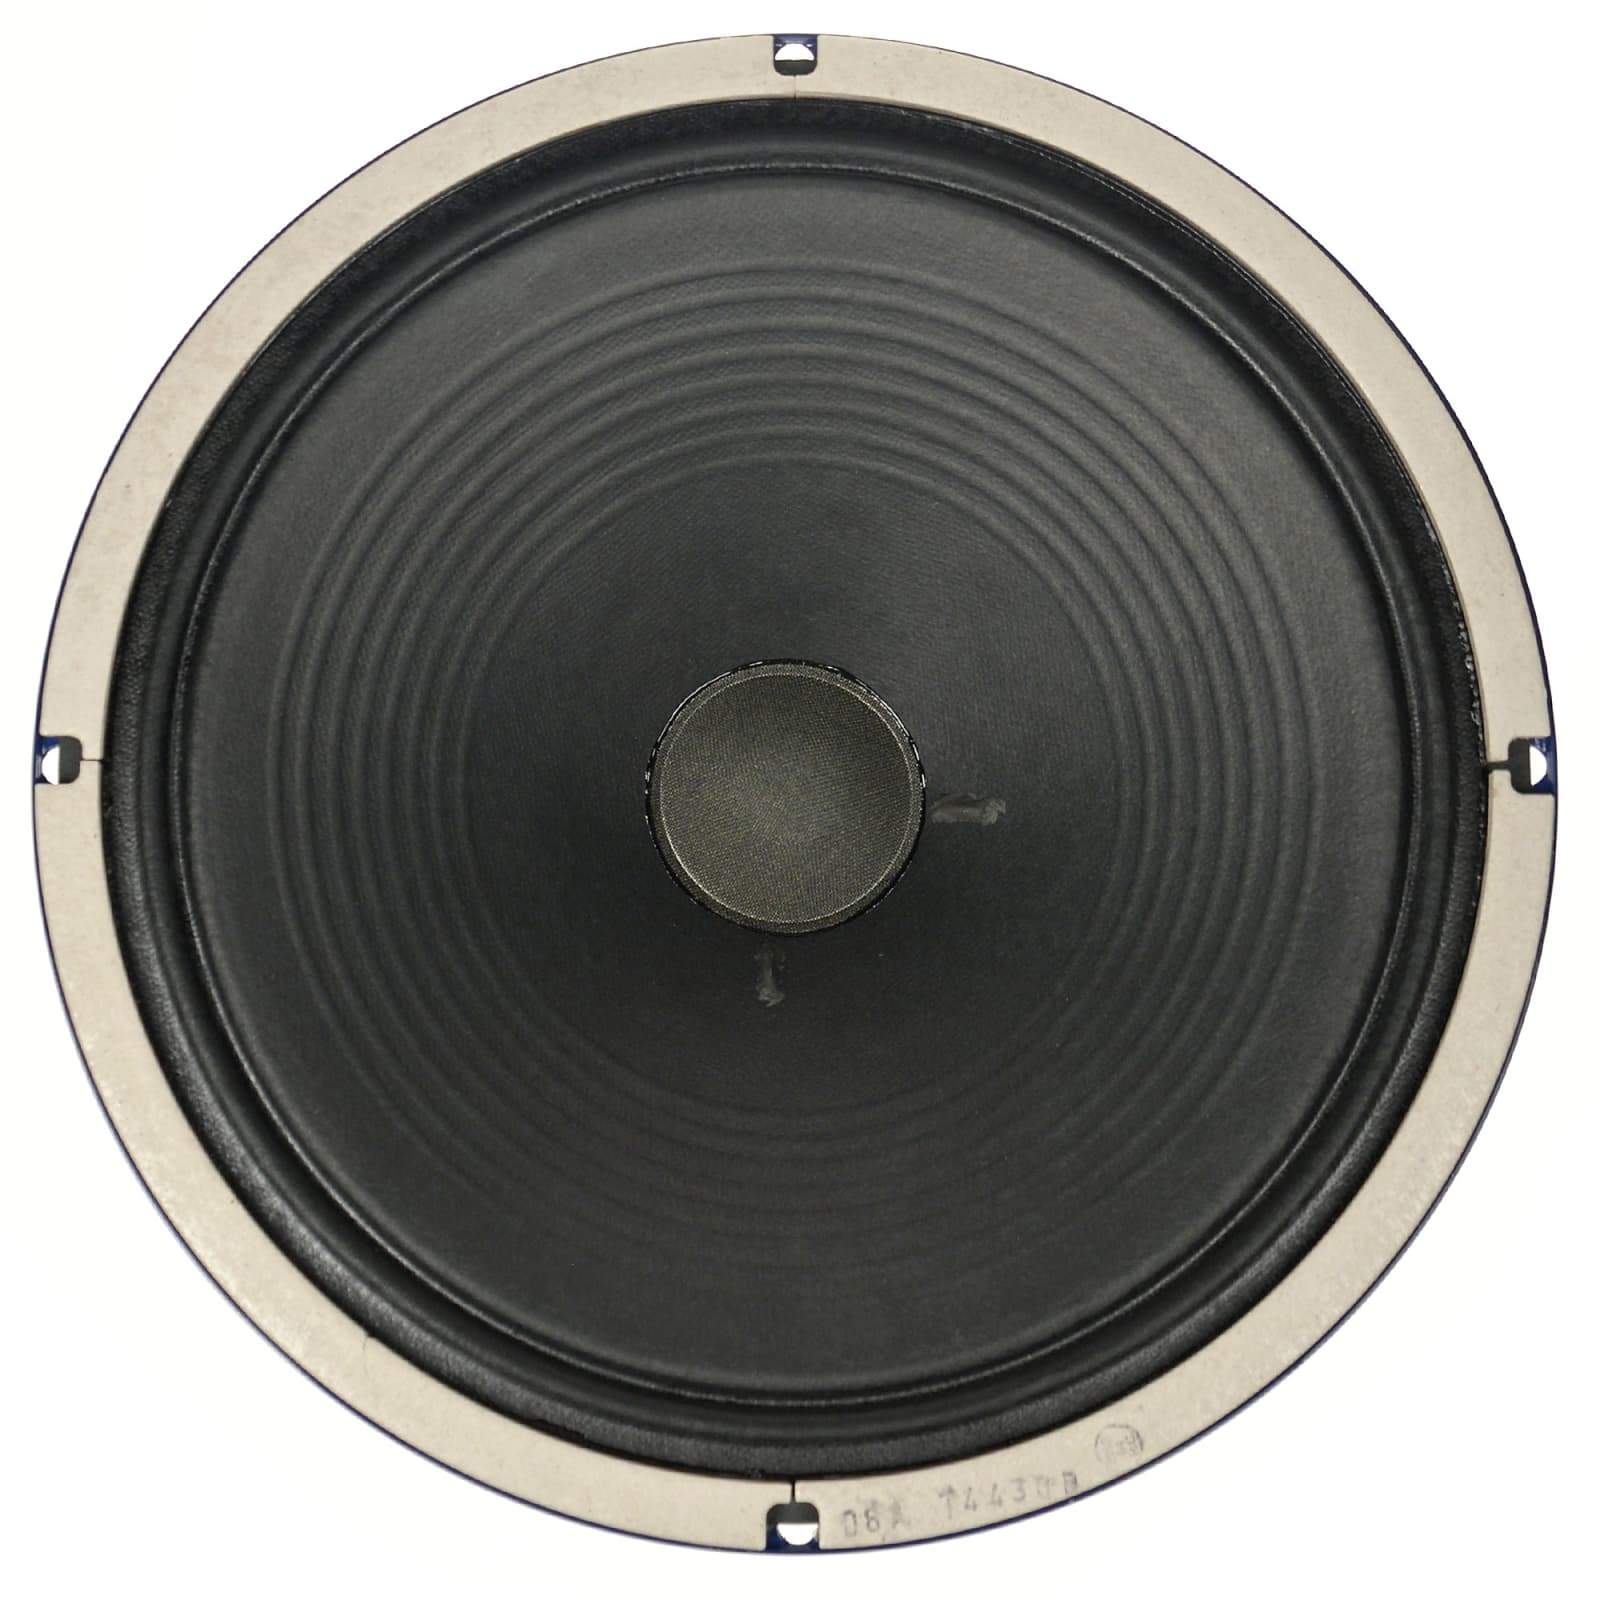 Celestion Alnico Series Blue 12 Inch 15-Watt 16 Ohm Speaker Parts / Replacement Speakers